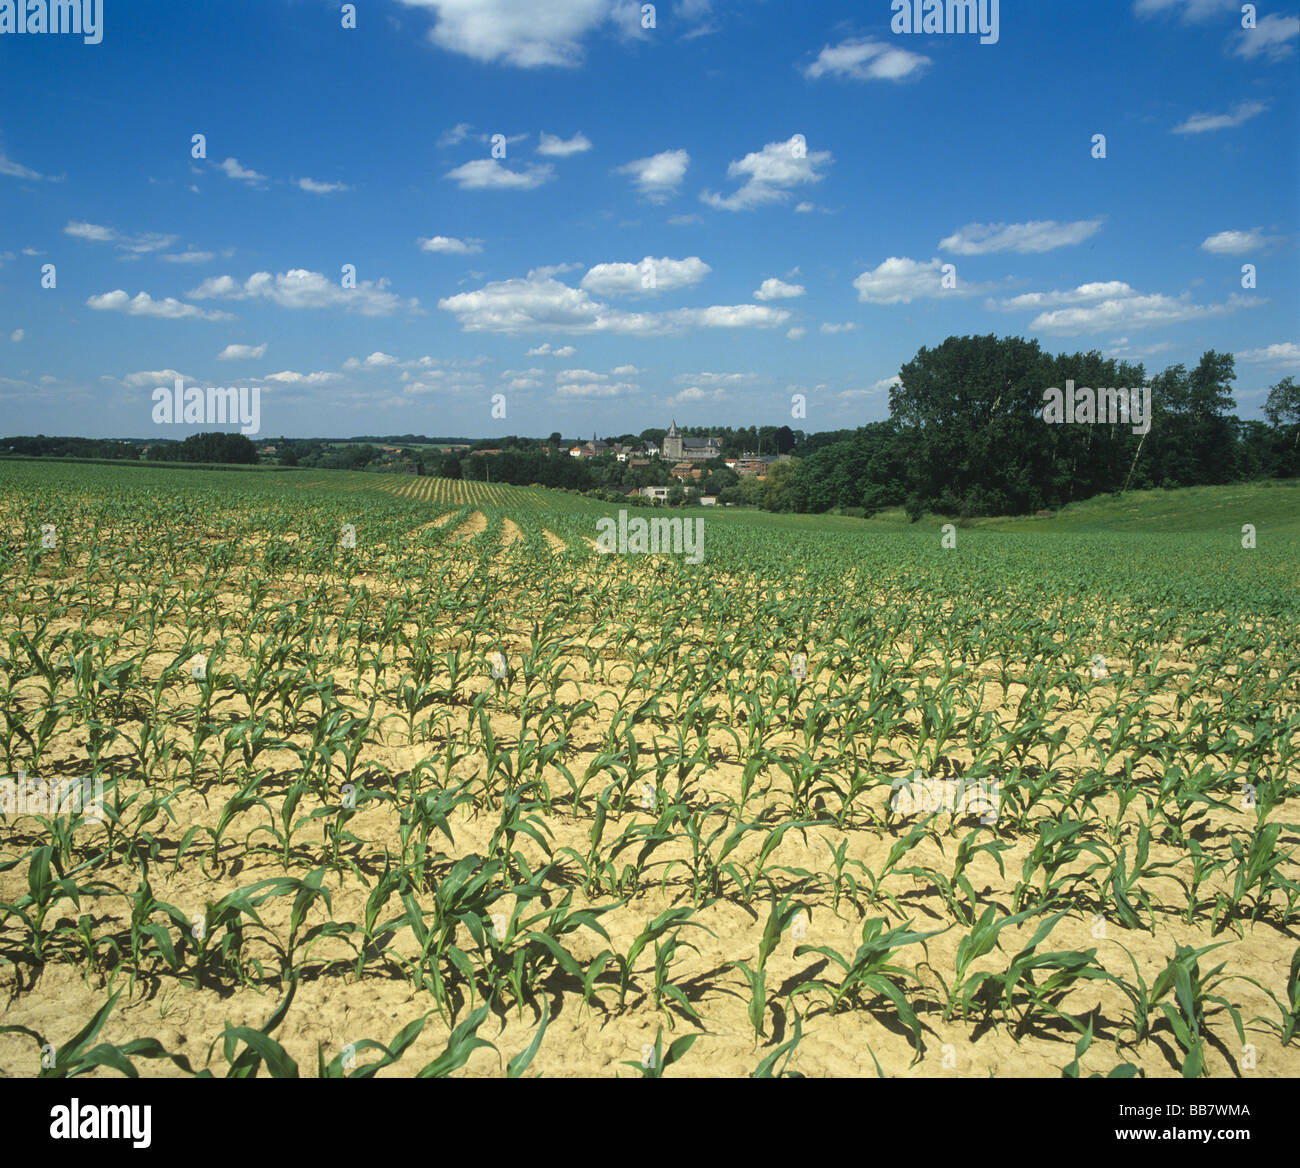 Cosecha de maíz joven en buen día de verano con aldea Nodebais detrás de Bélgica Foto de stock